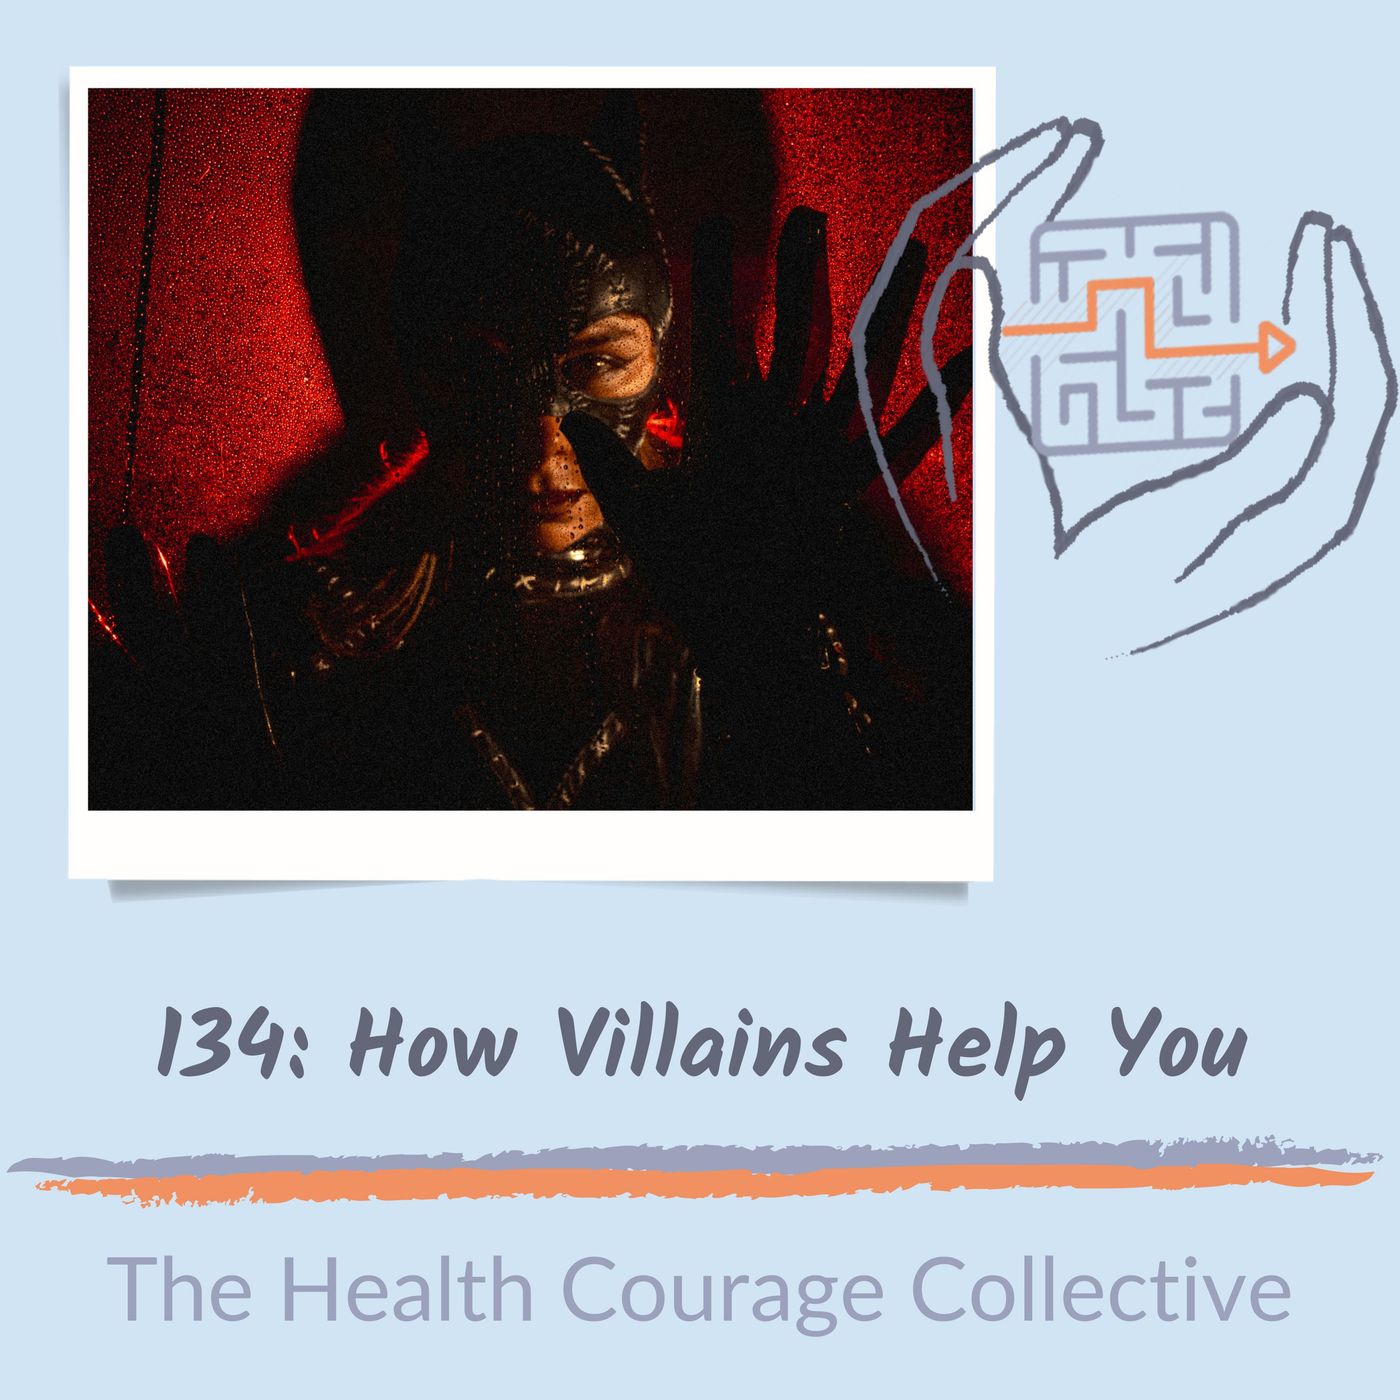 134: How Villains Help You